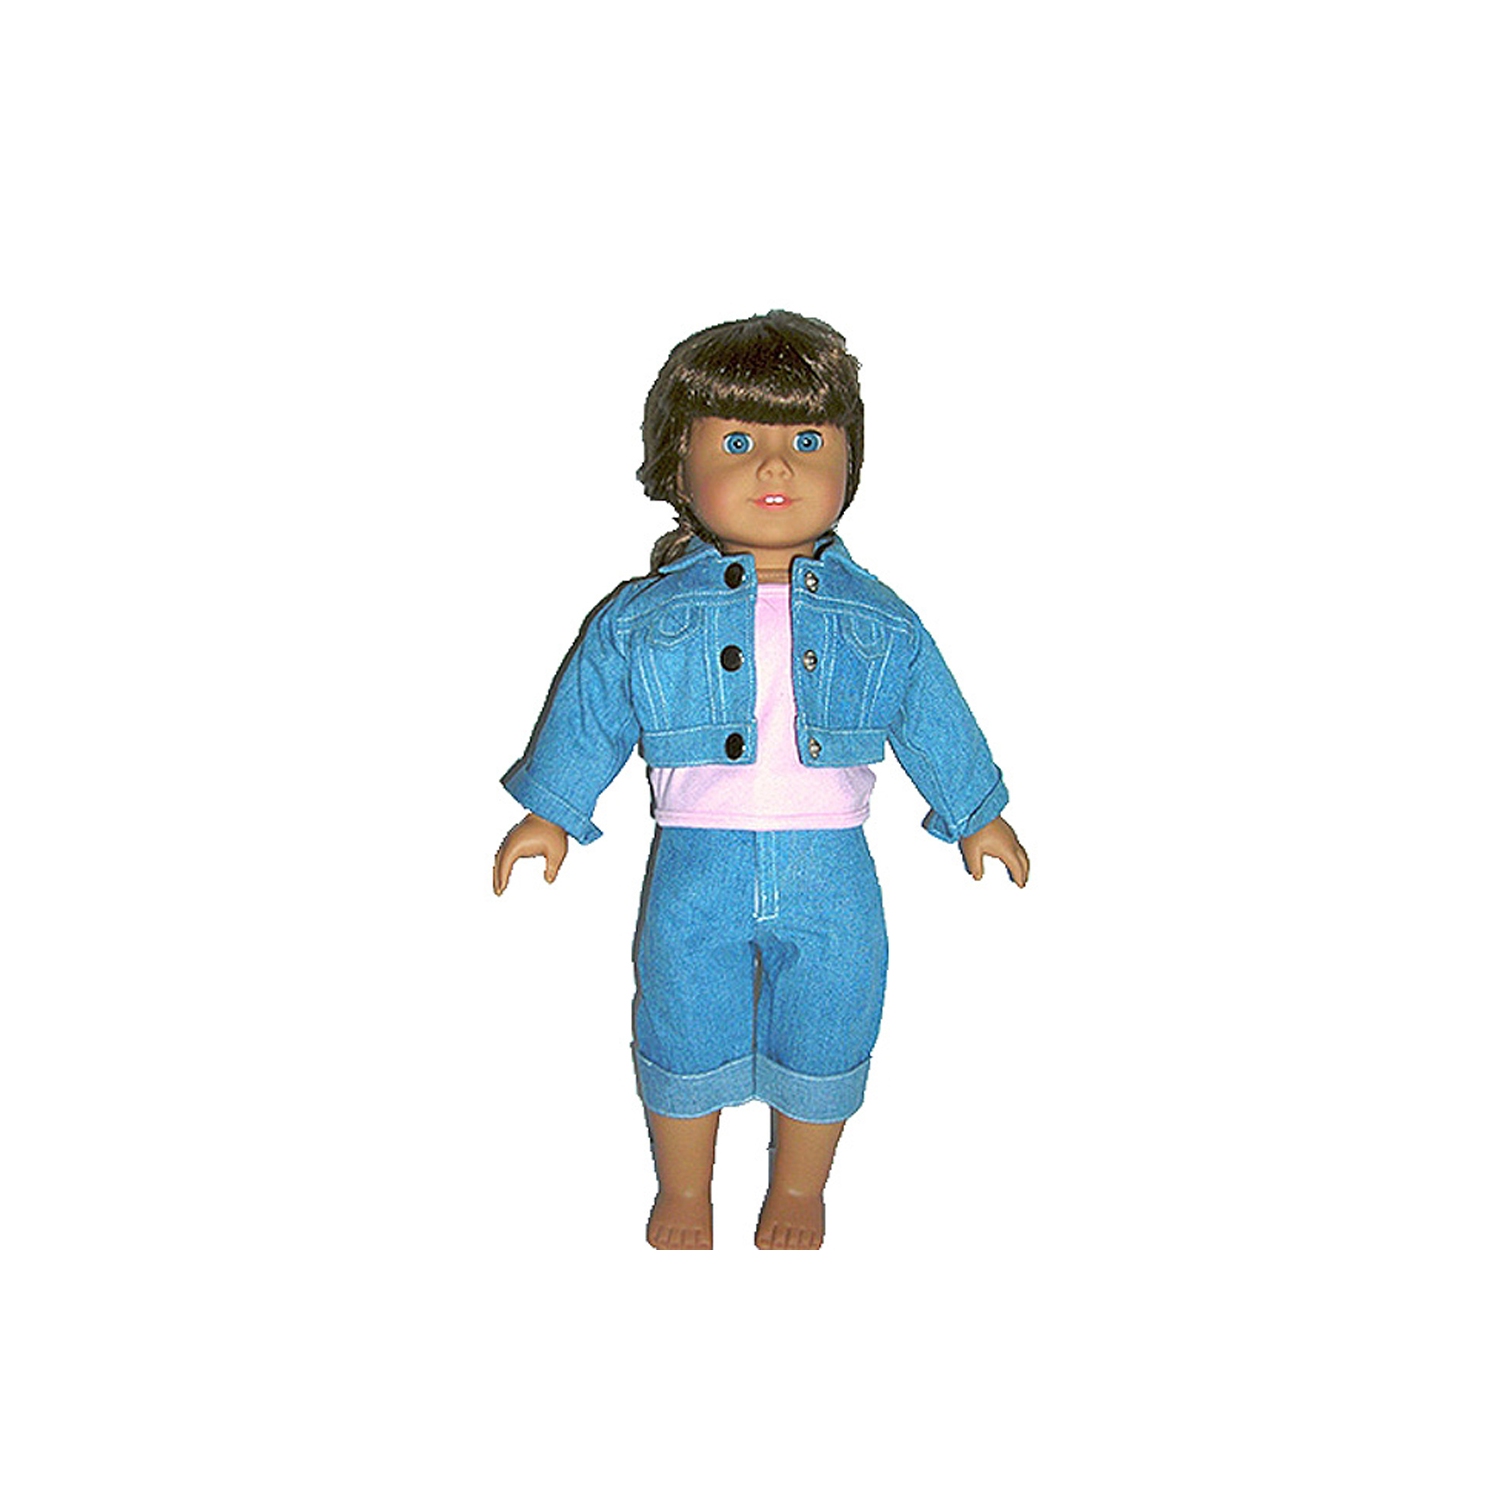 Dress Rite 18" Doll Clothing Denim Jacket, Pink Top & Jeans